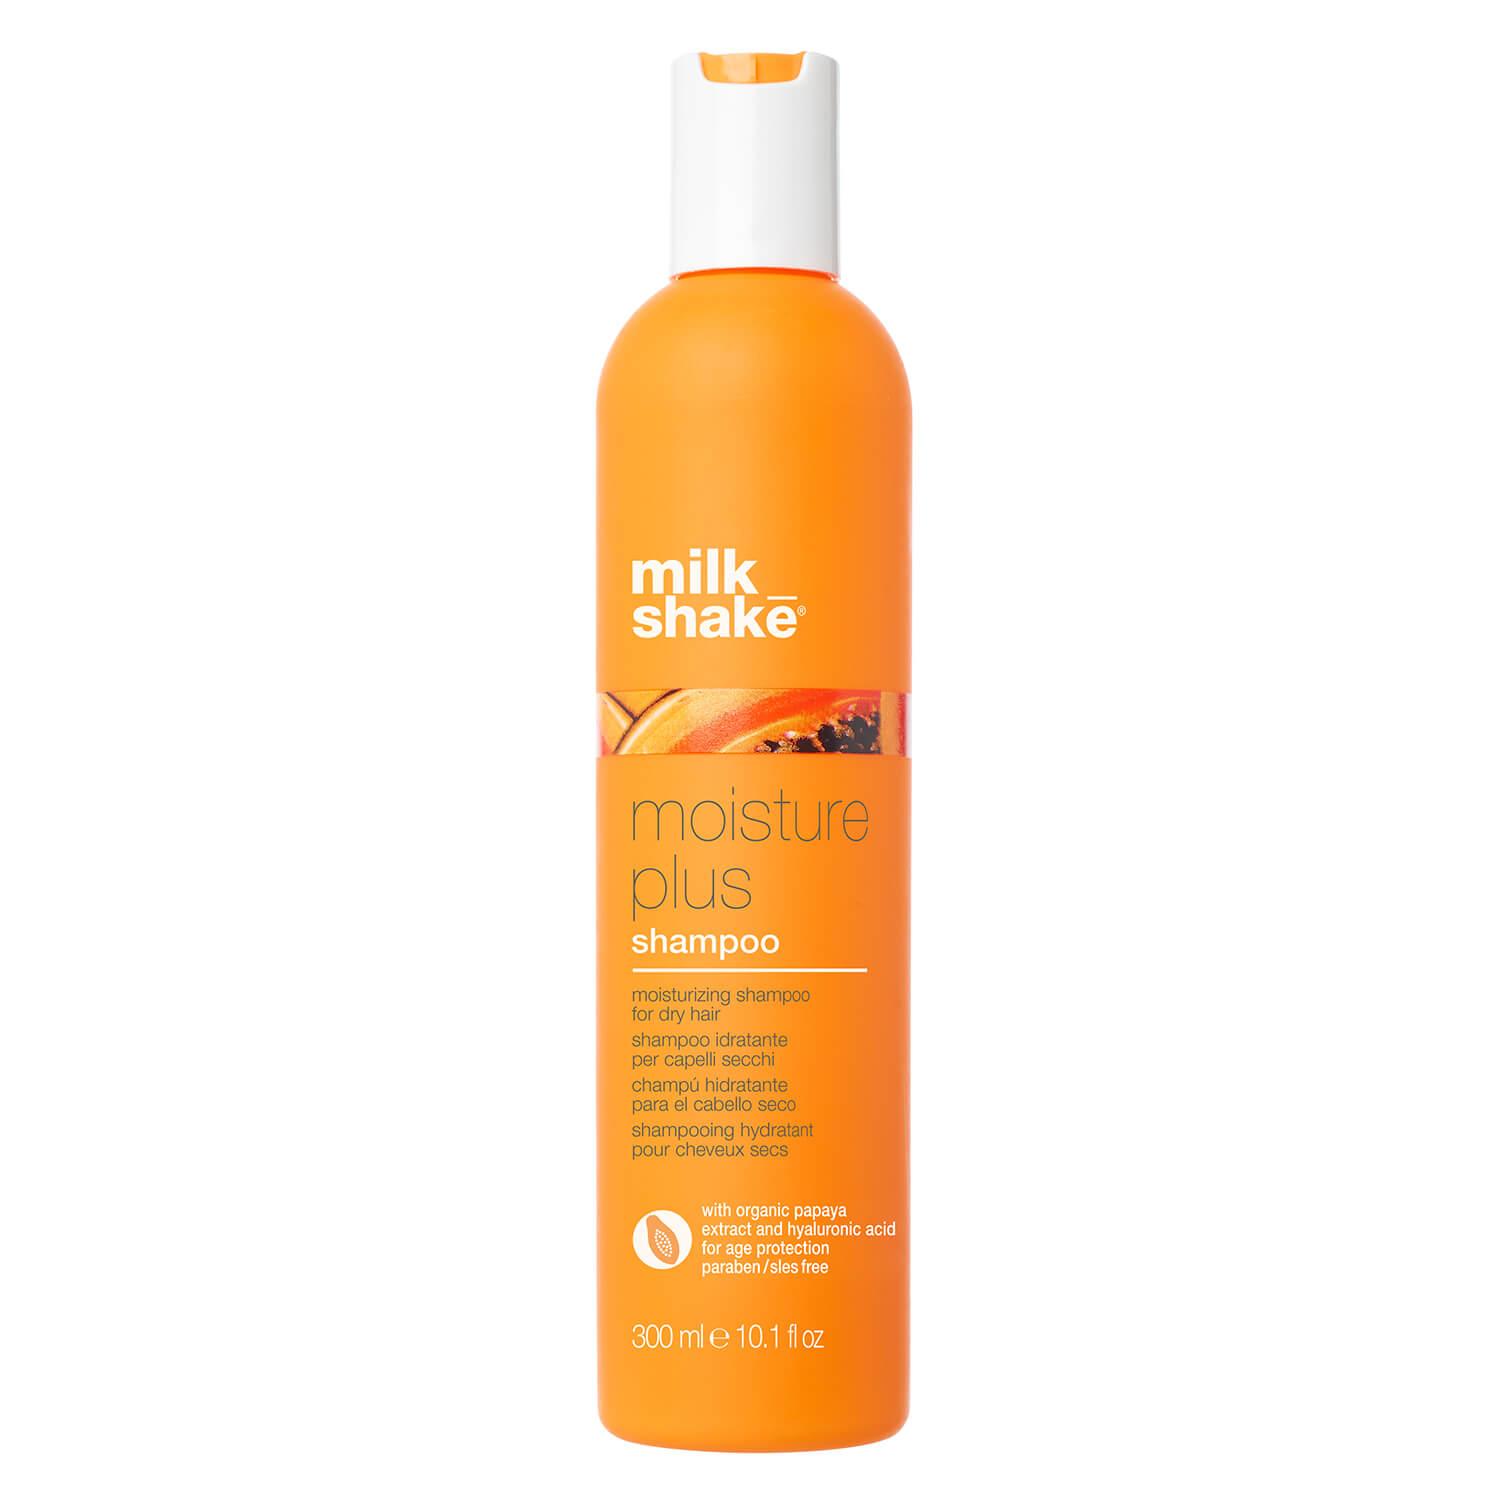 milk_shake moisture plus - shampoo 